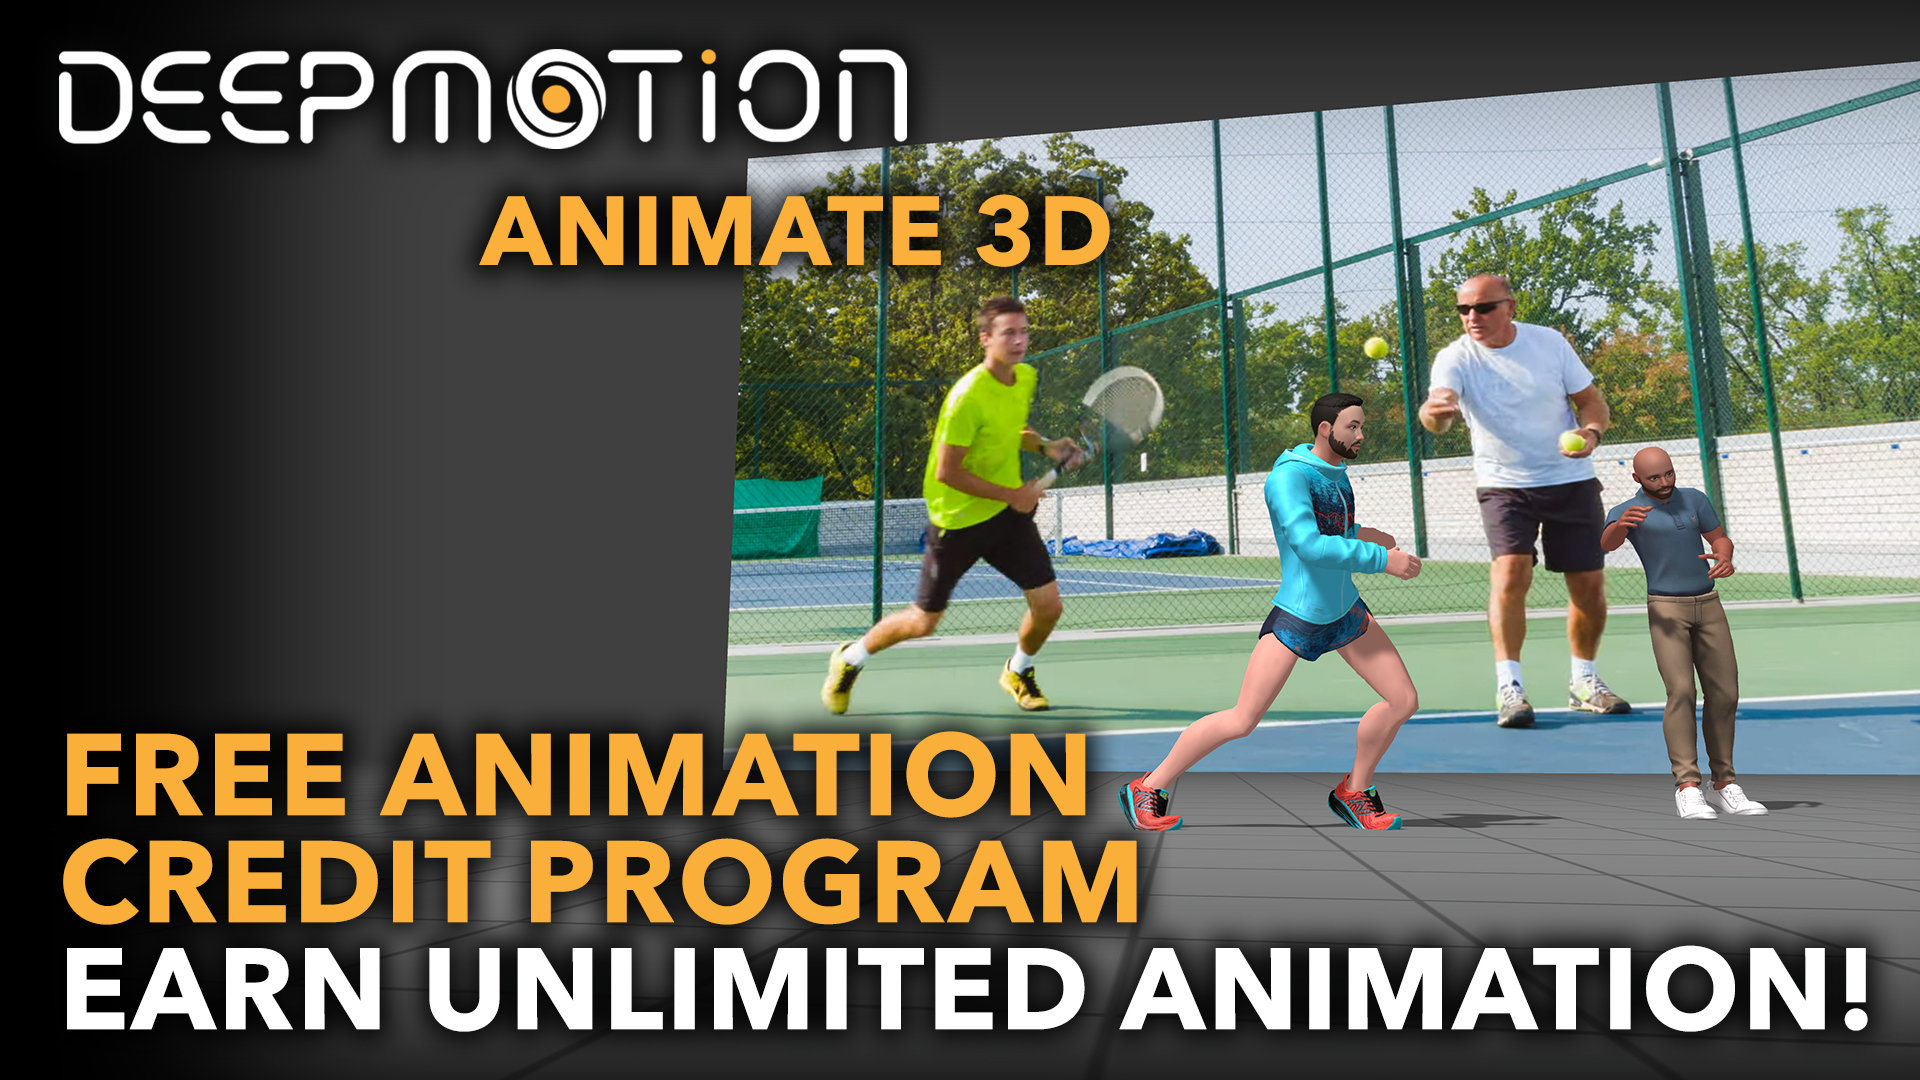 Introducing DeepMotion's Free Animation Credit Program!